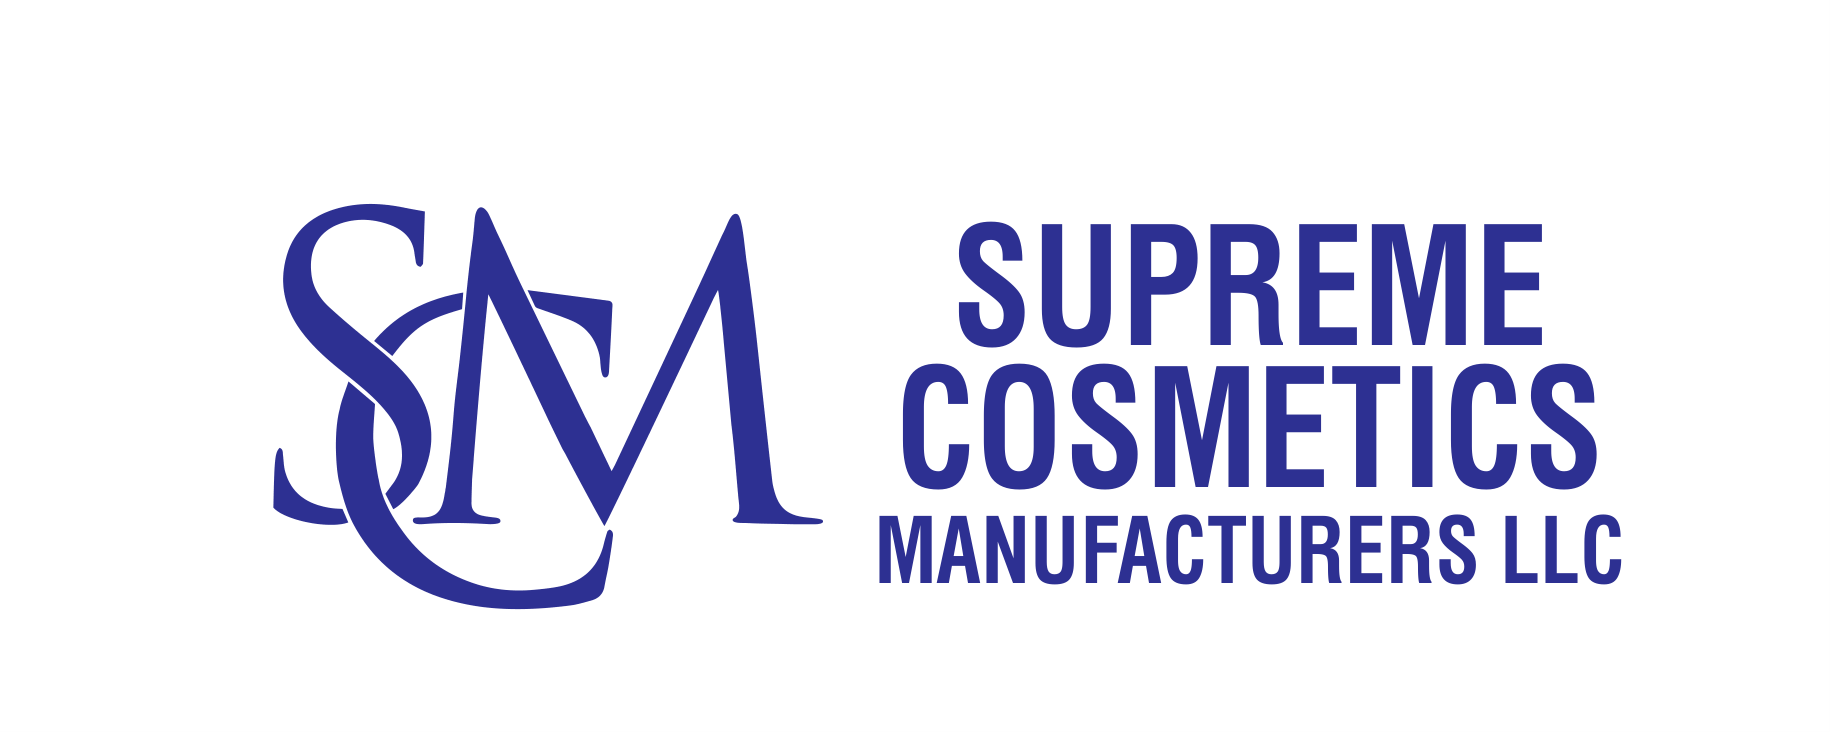 Supreme Cosmetics Manufacturers